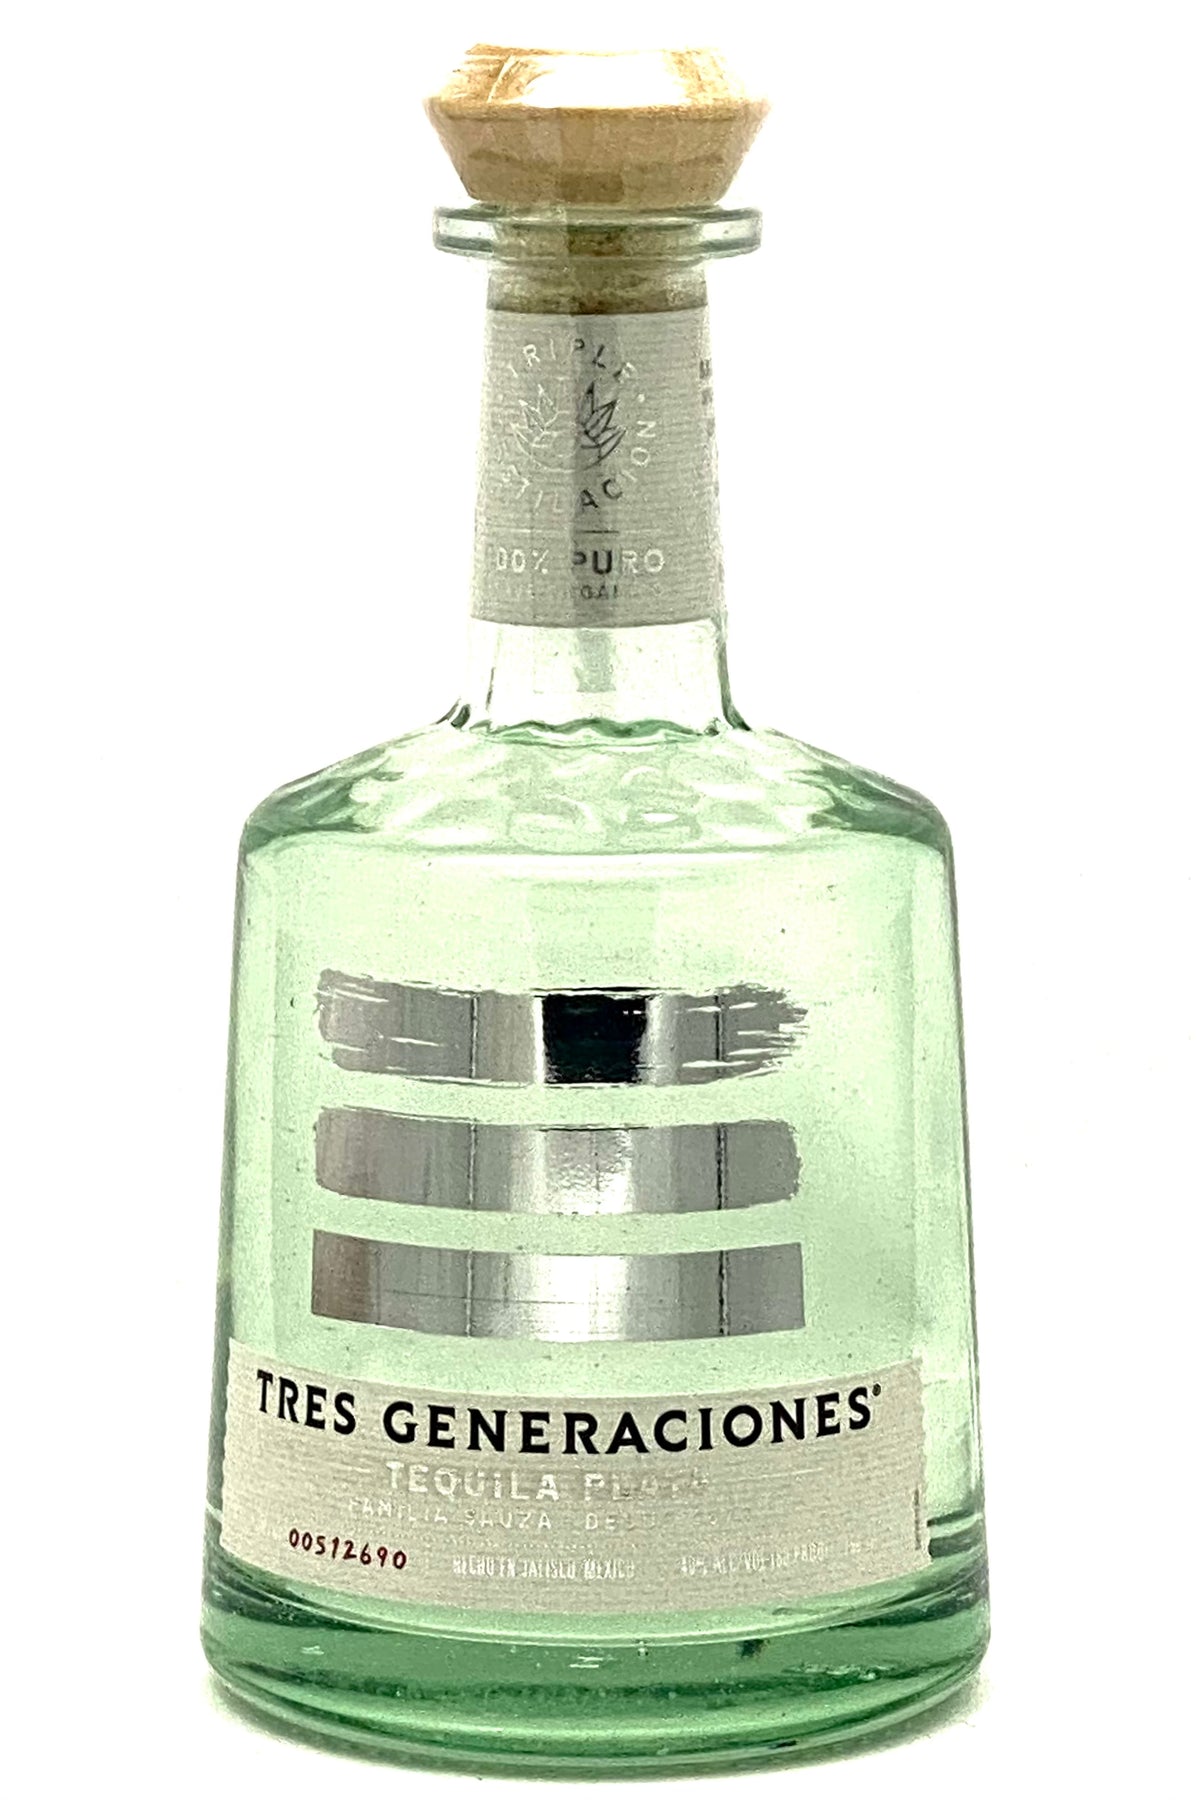 Tres Generaciones Tequila Plata by Sauza